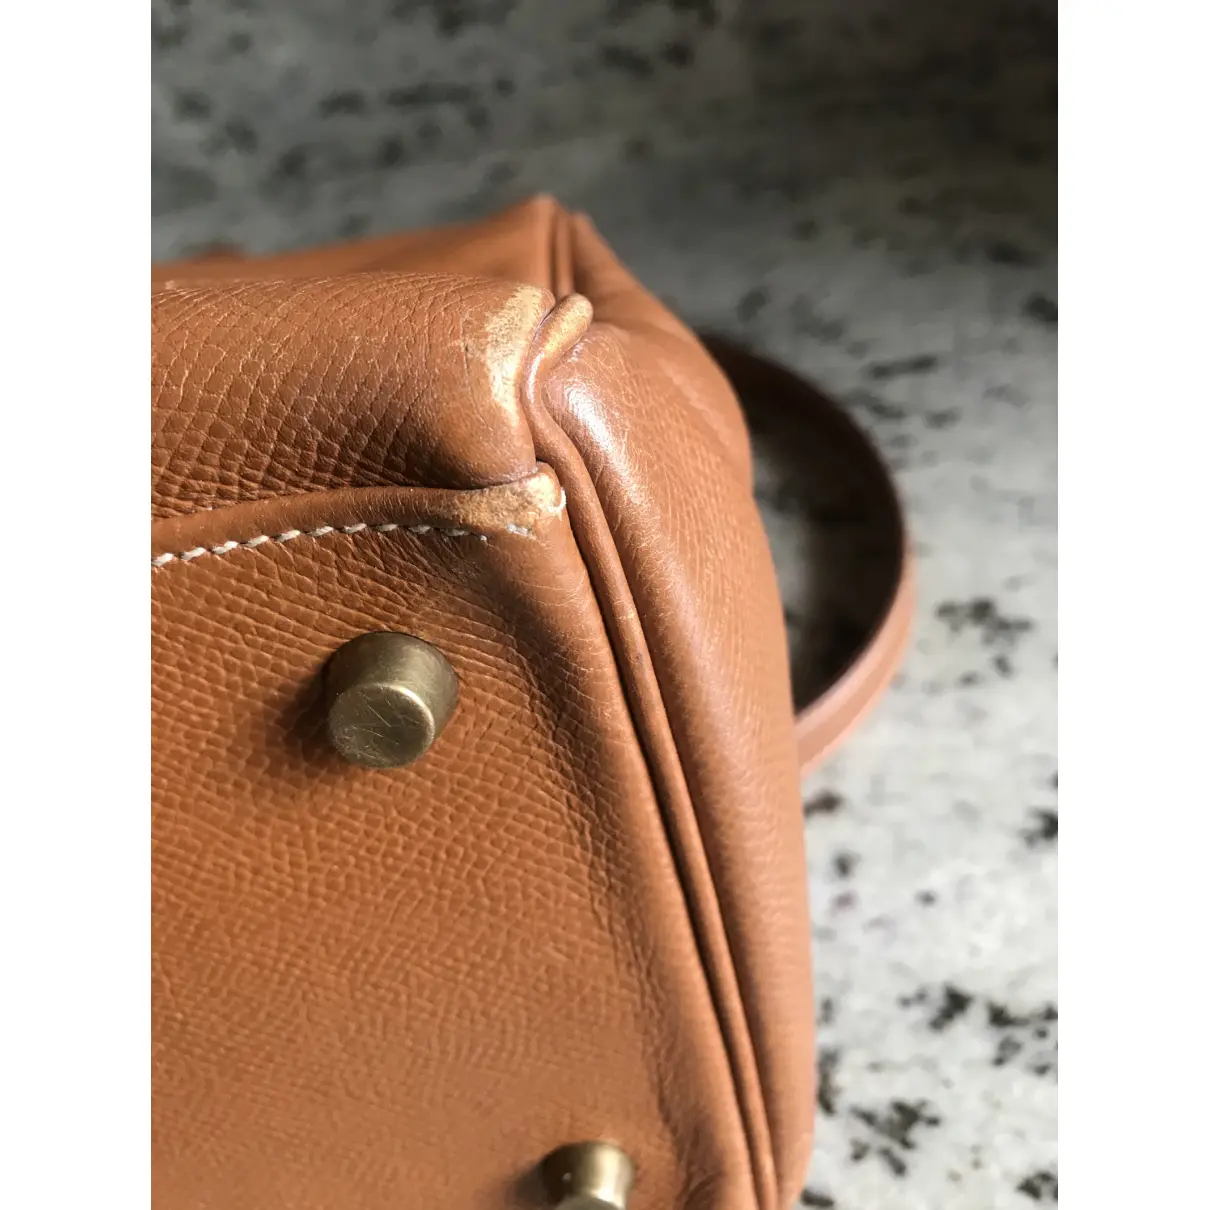 Kelly 35 leather handbag Hermès